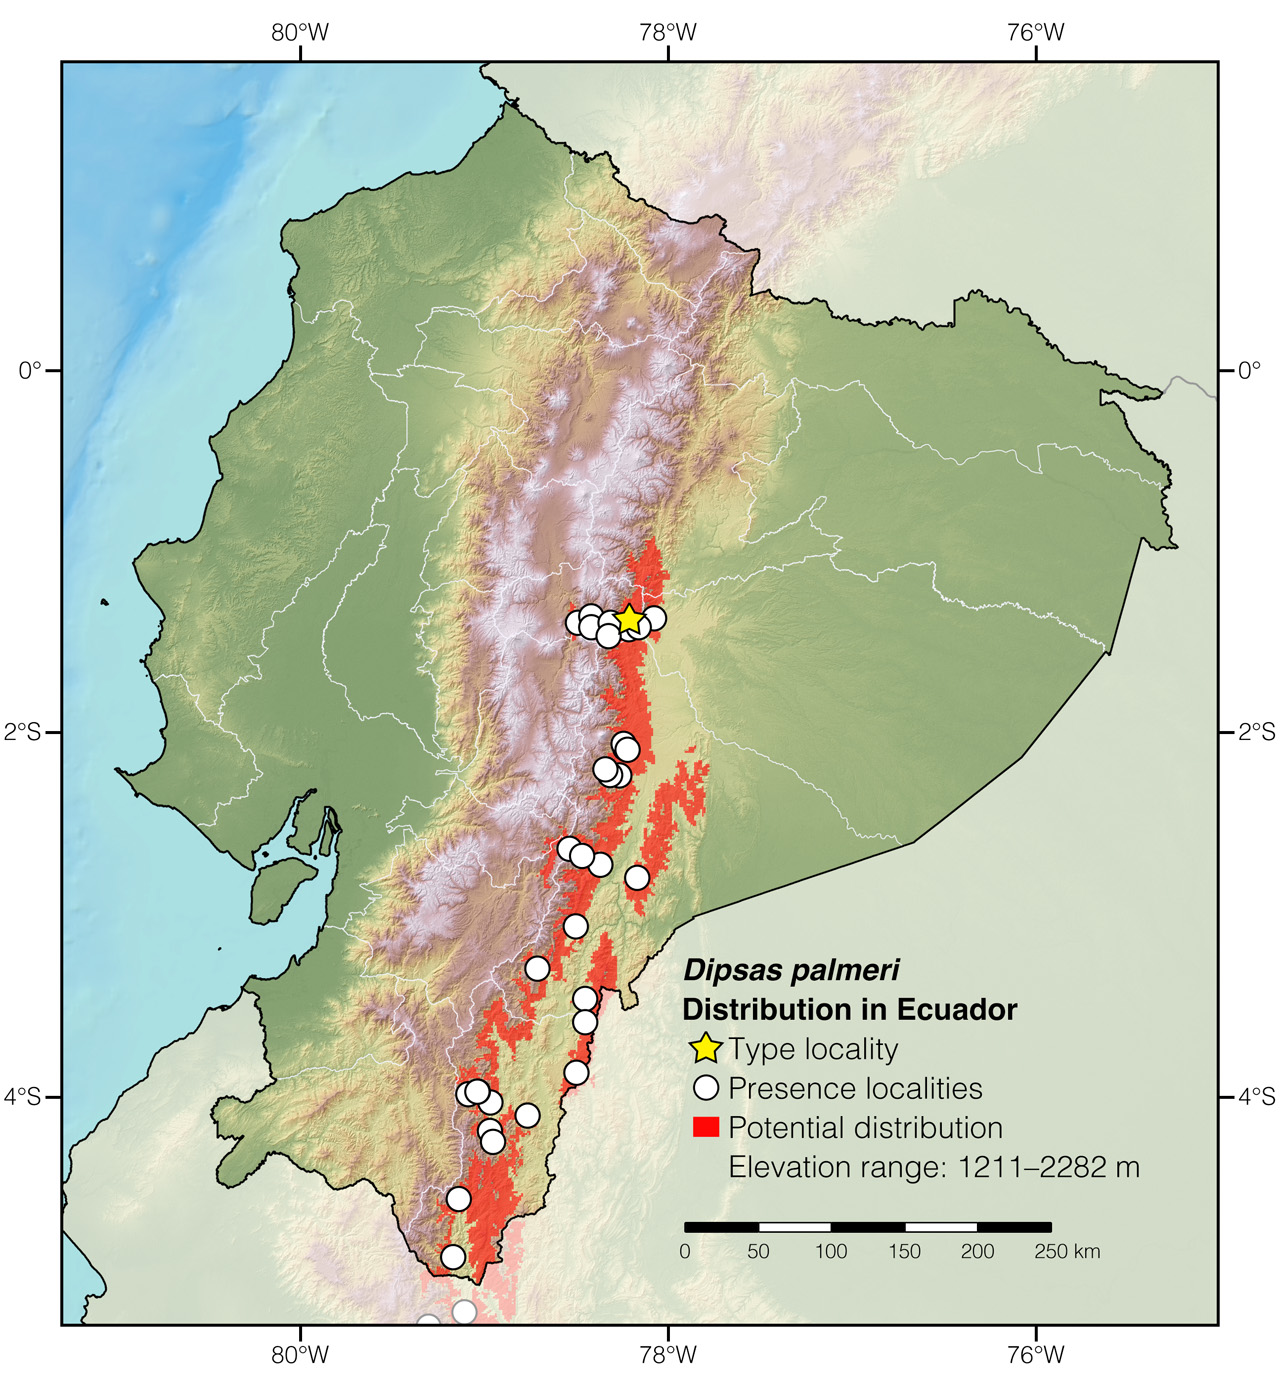 Distribution of Dipsas palmeri in Ecuador